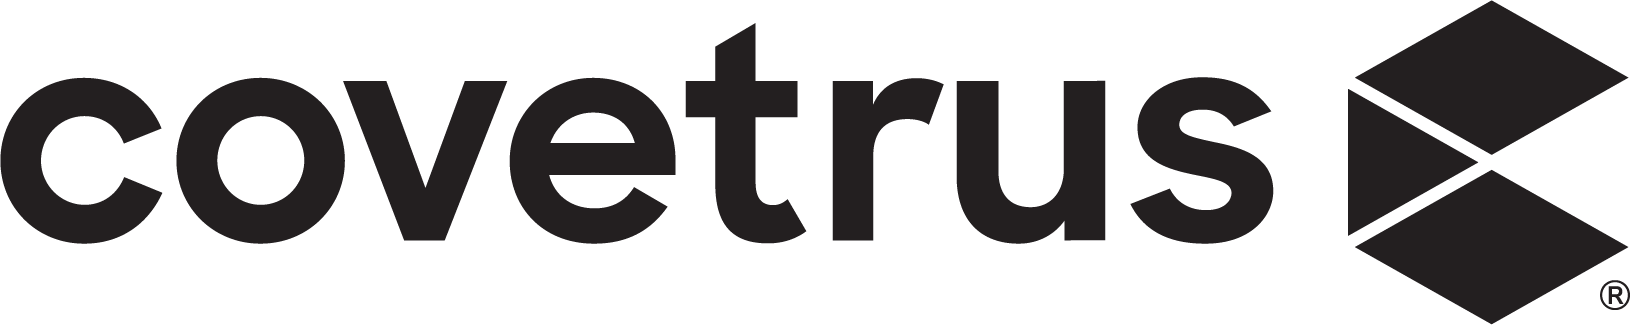 covetrus logo in black large